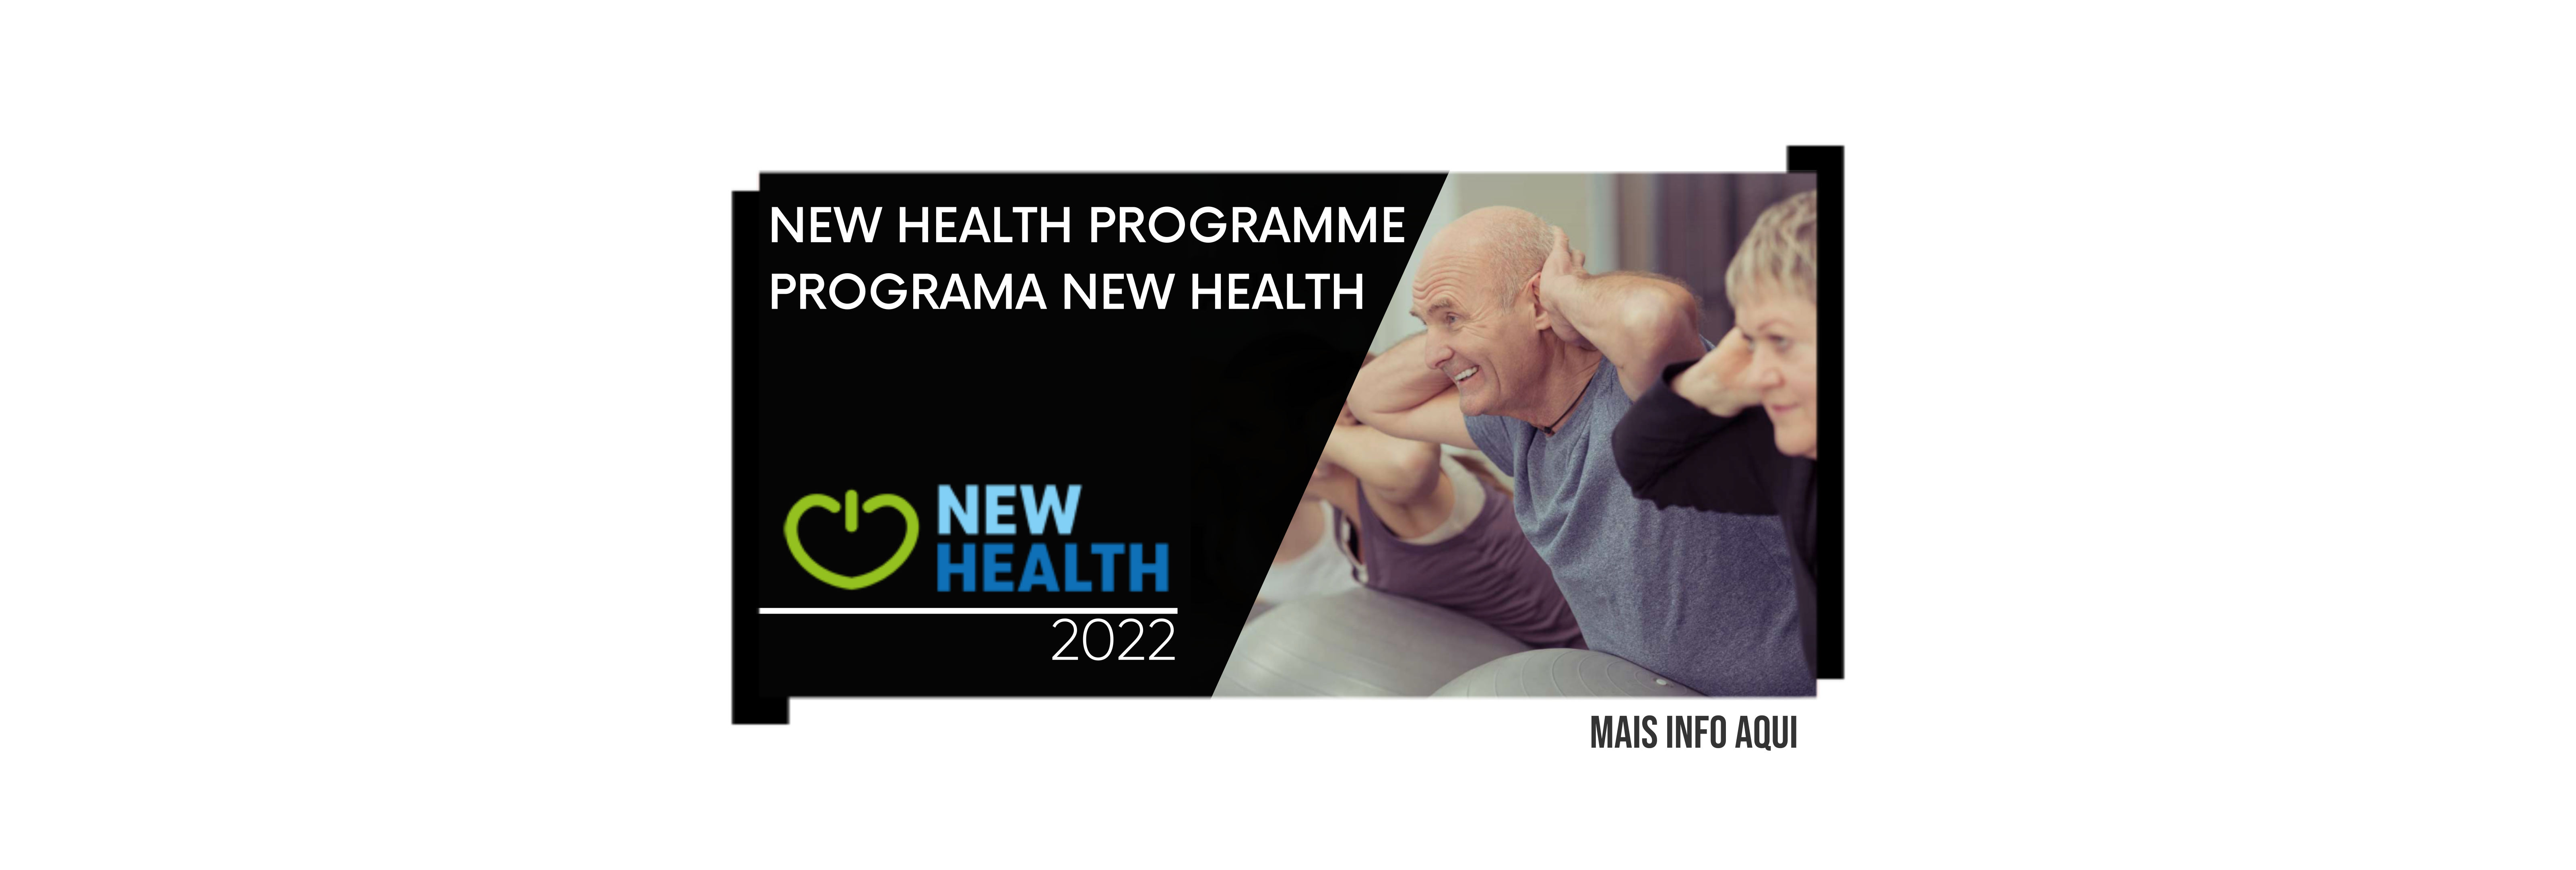 Projeto New Health